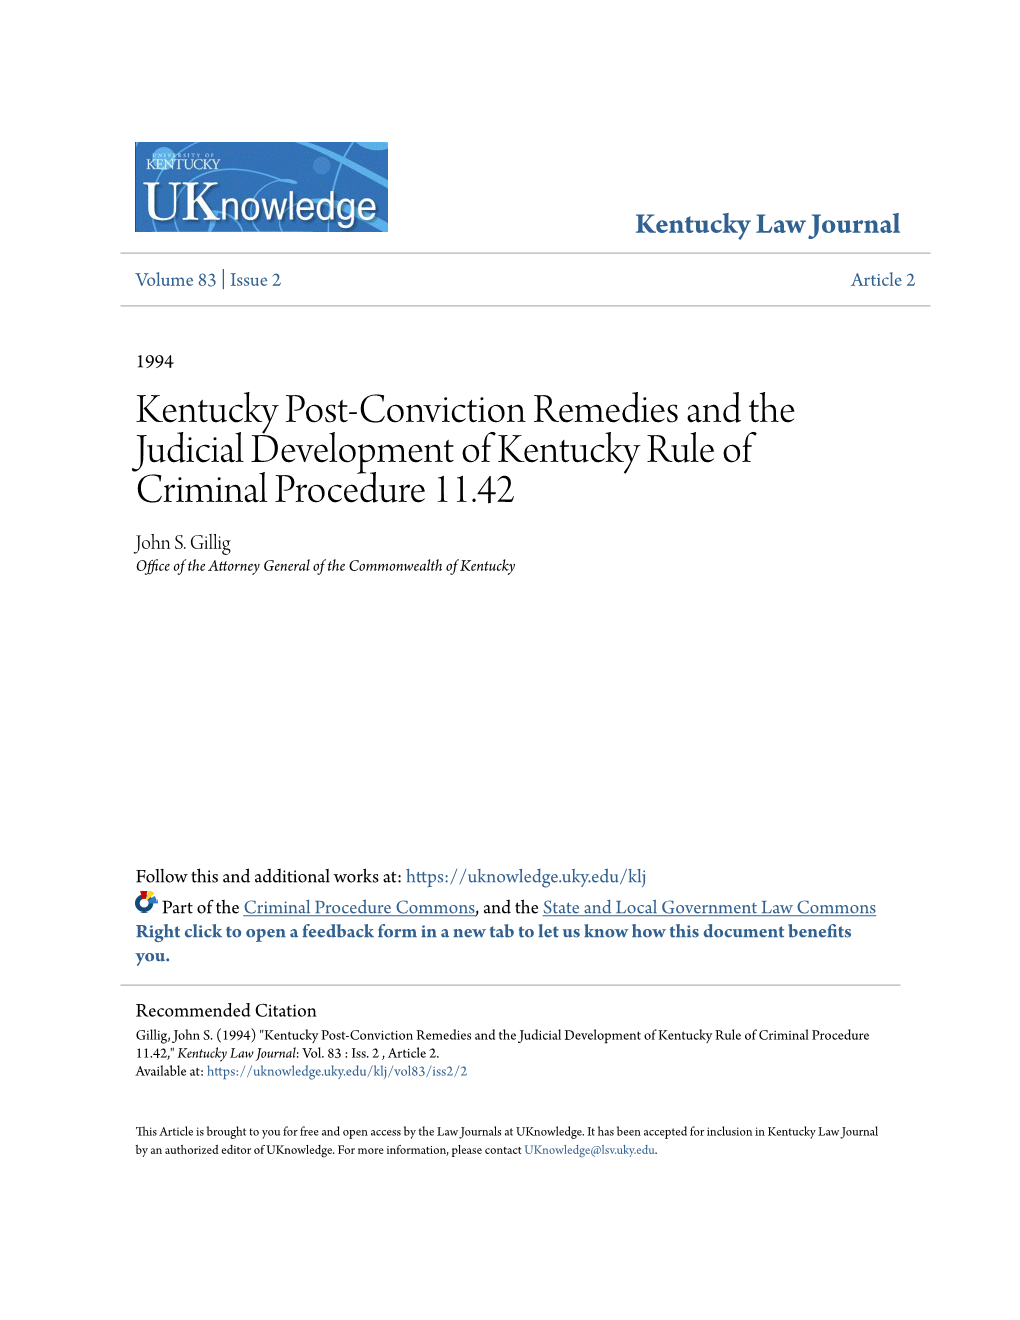 Kentucky Post-Conviction Remedies and the Judicial Development of Kentucky Rule of Criminal Procedure 11.42 John S